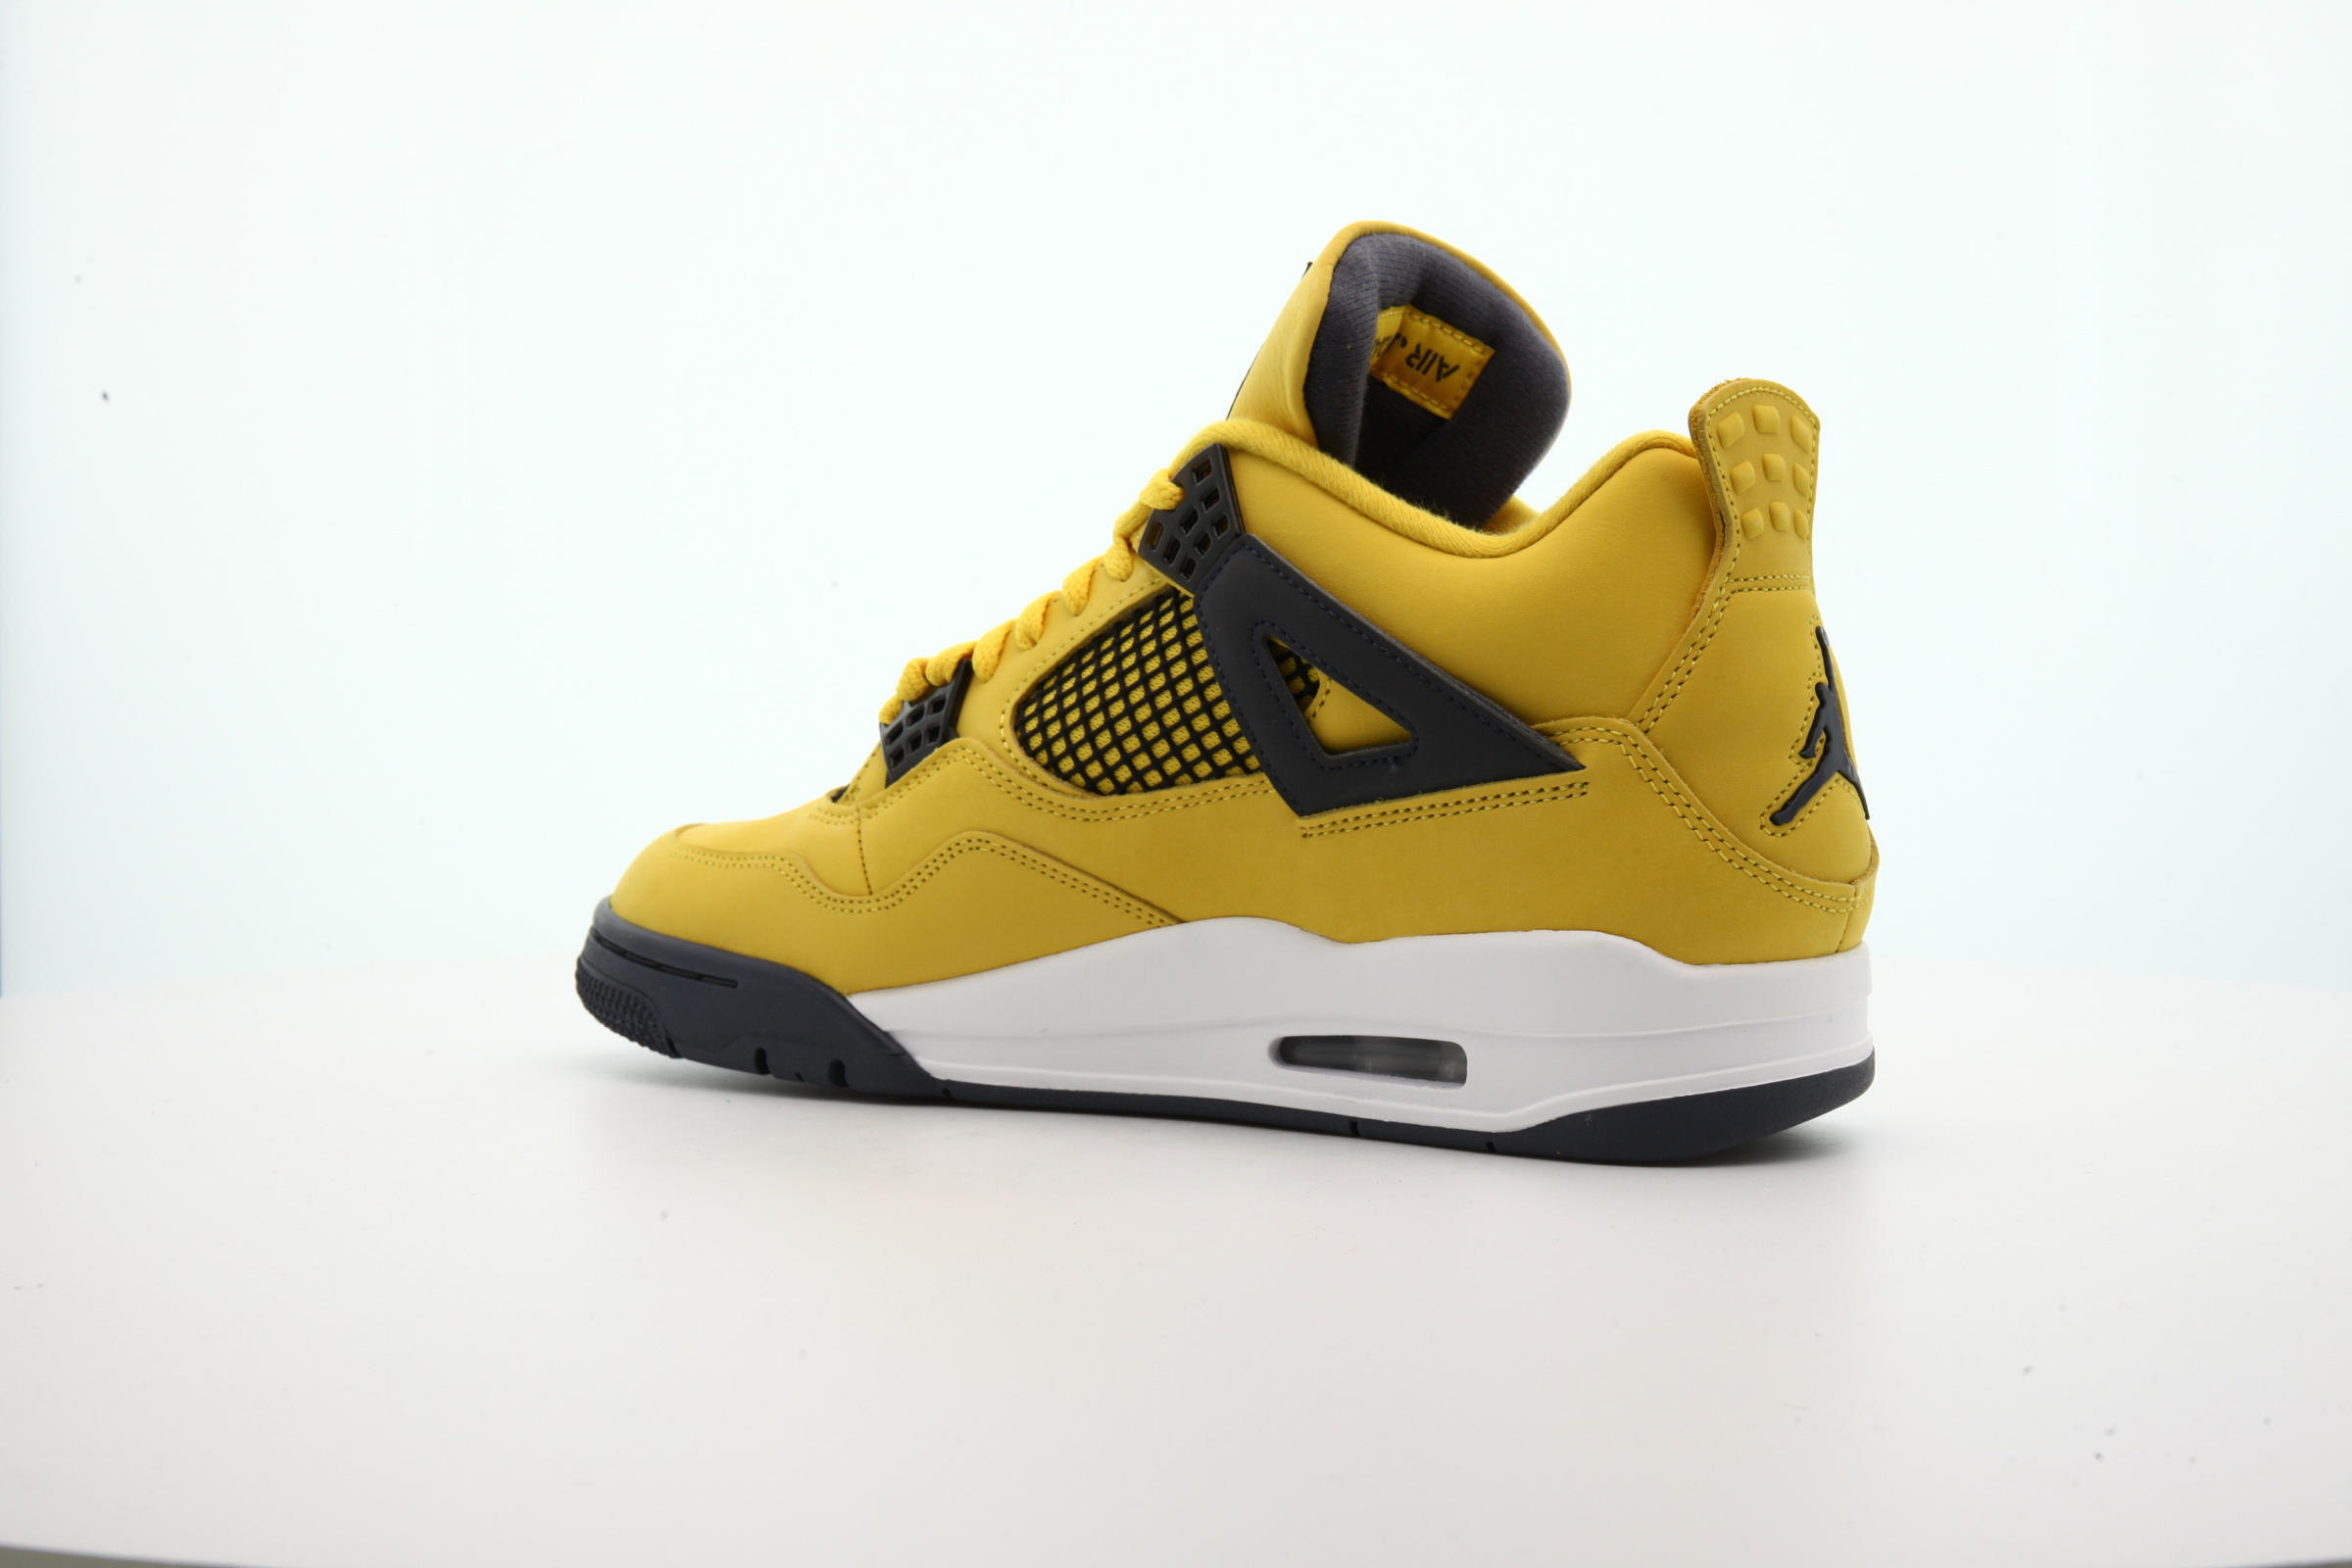 Air Jordan 4 RETRO "Tour Yellow"